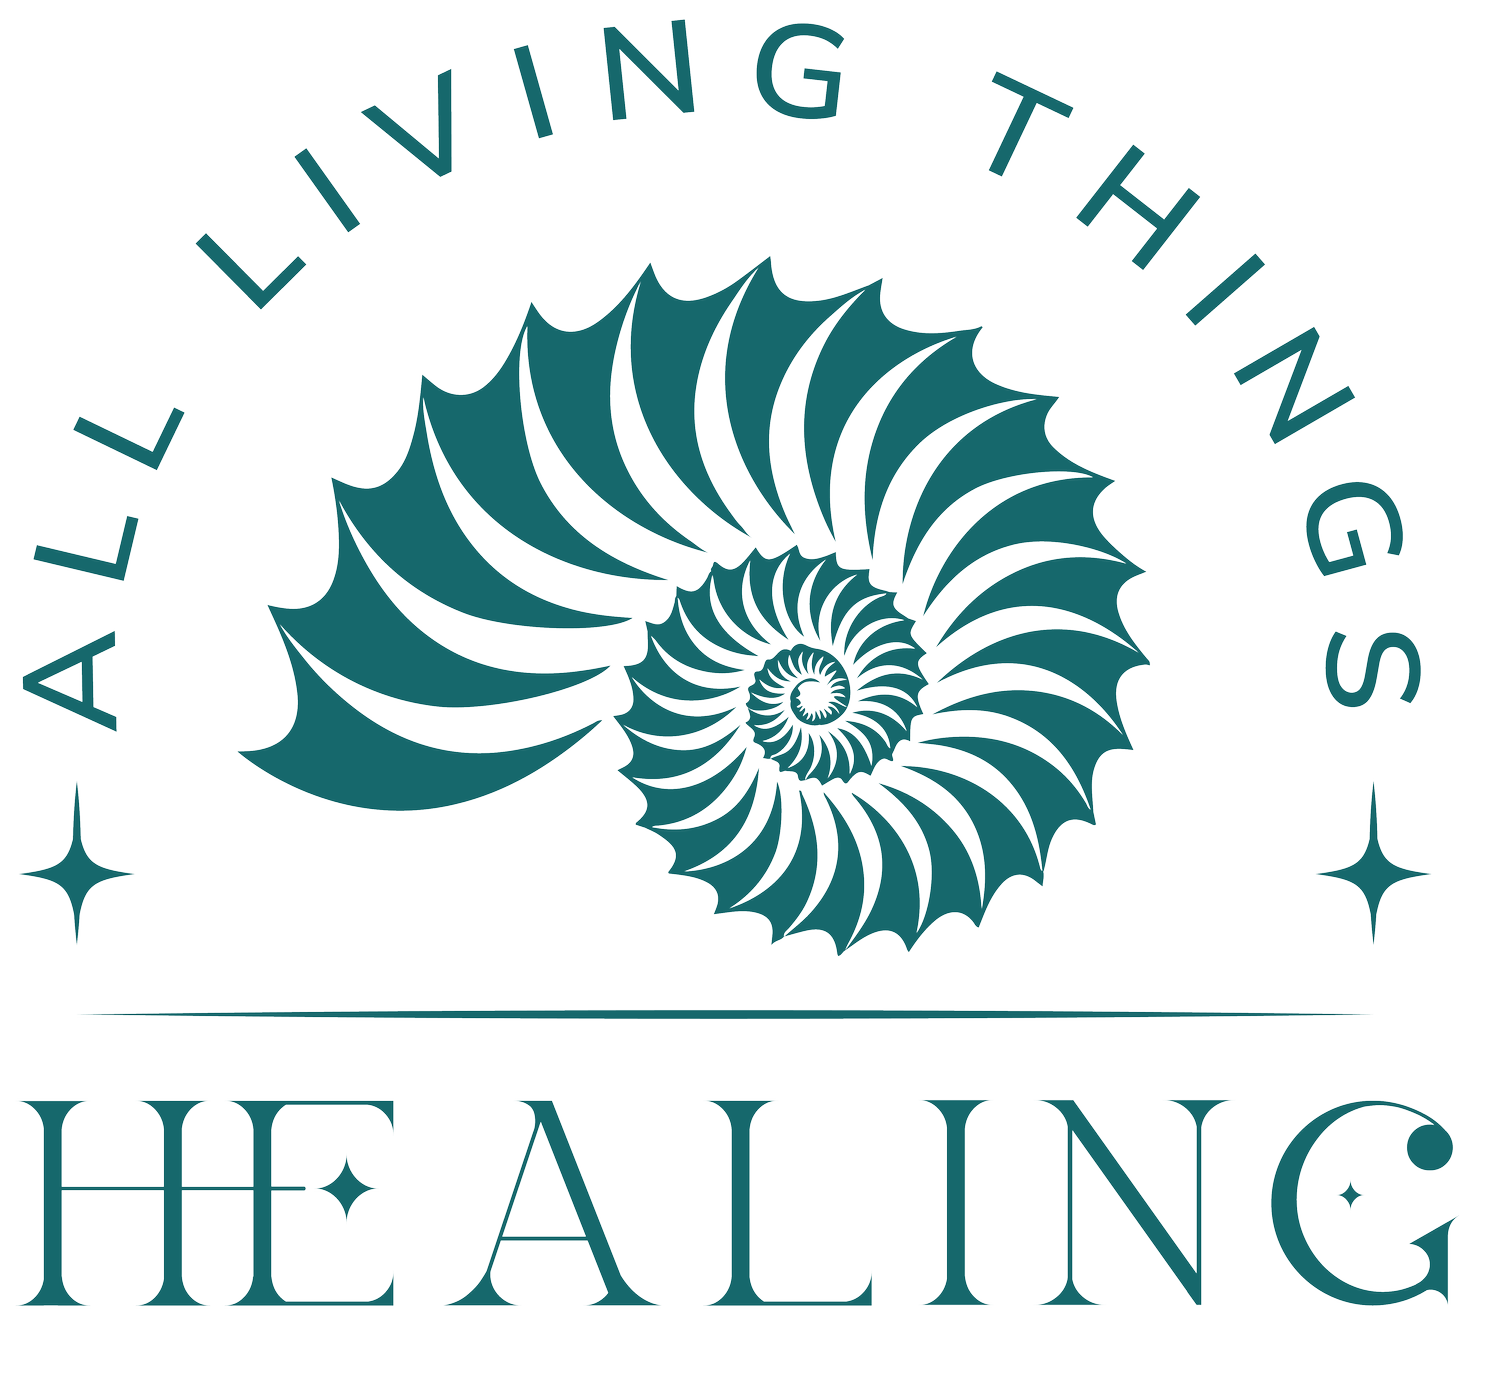 All Living Things Healing